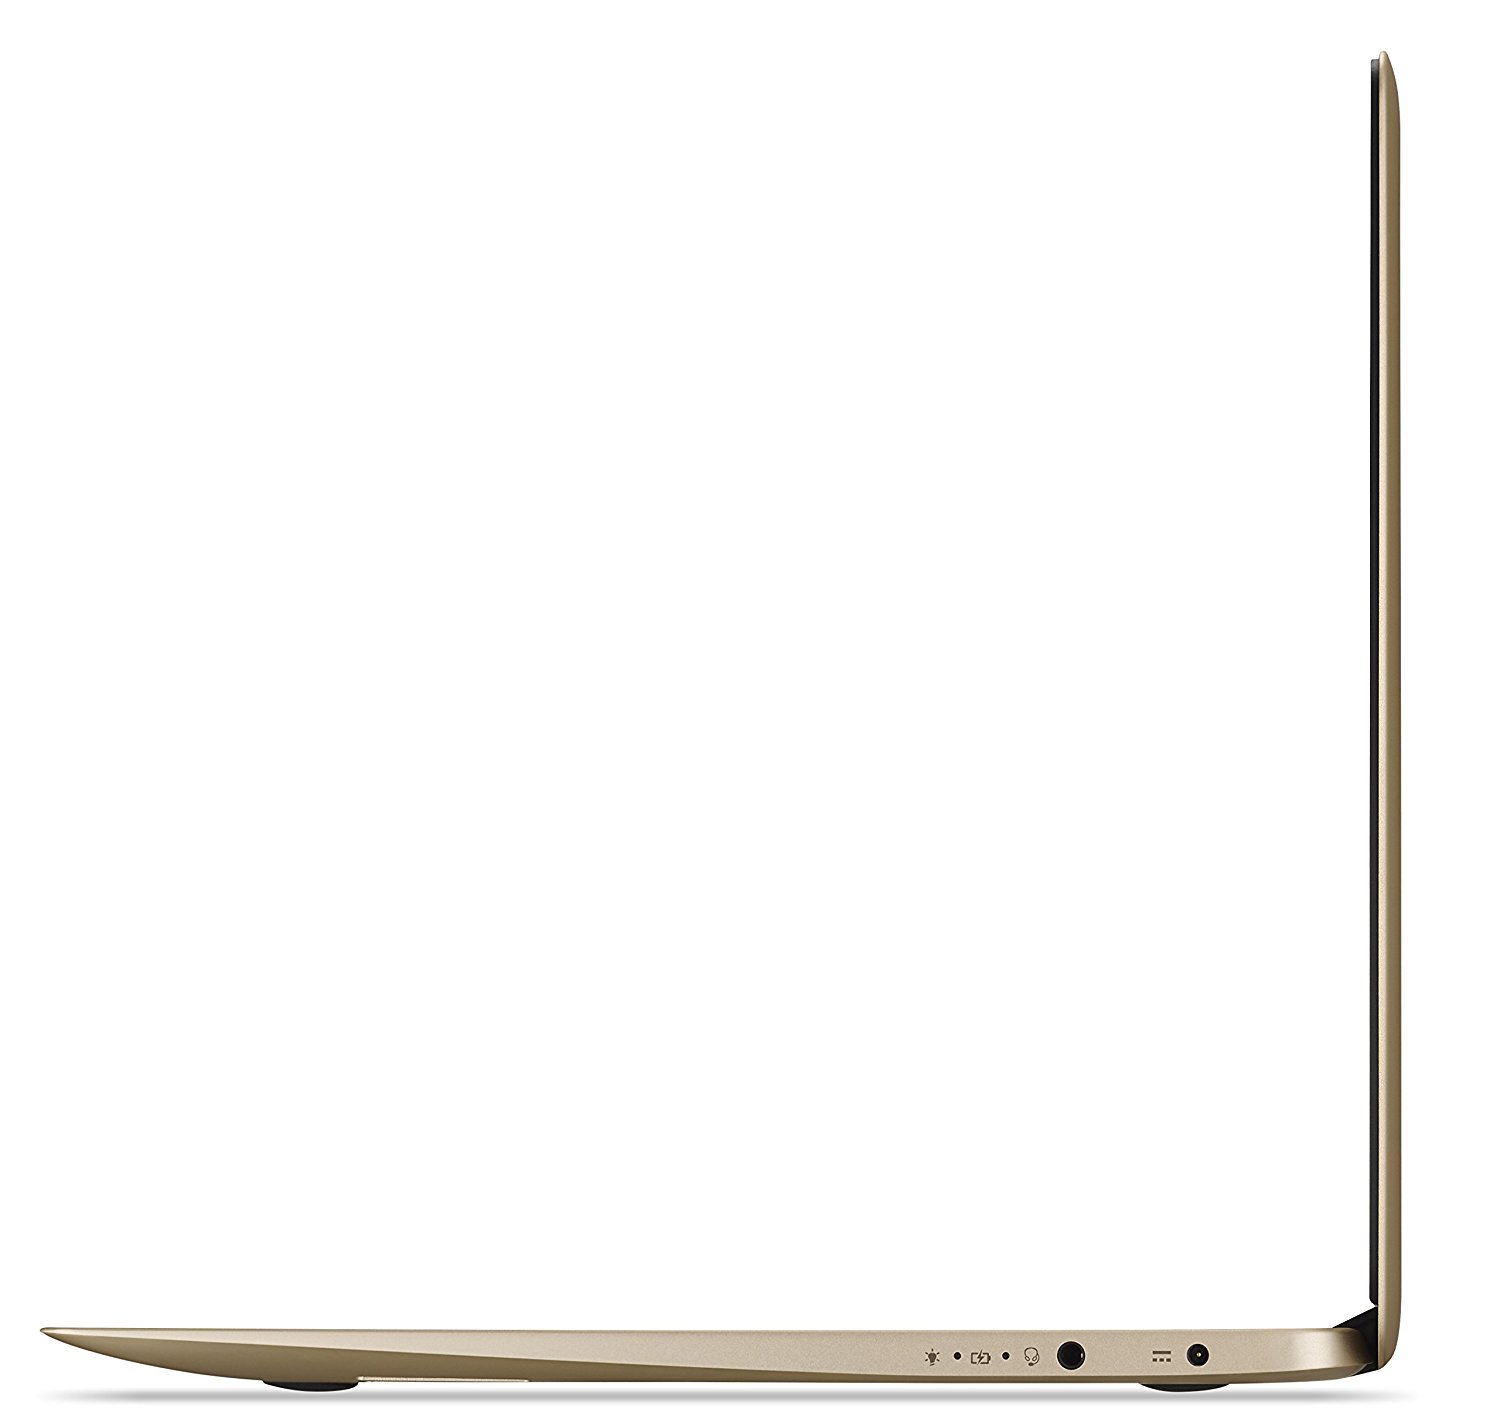 Acer Chromebook 14, Aluminum, 14-inch Full HD, Intel Celeron N3160, 4GB LPDDR3, 32GB, Chrome, Gold, CB3-431-C0AK